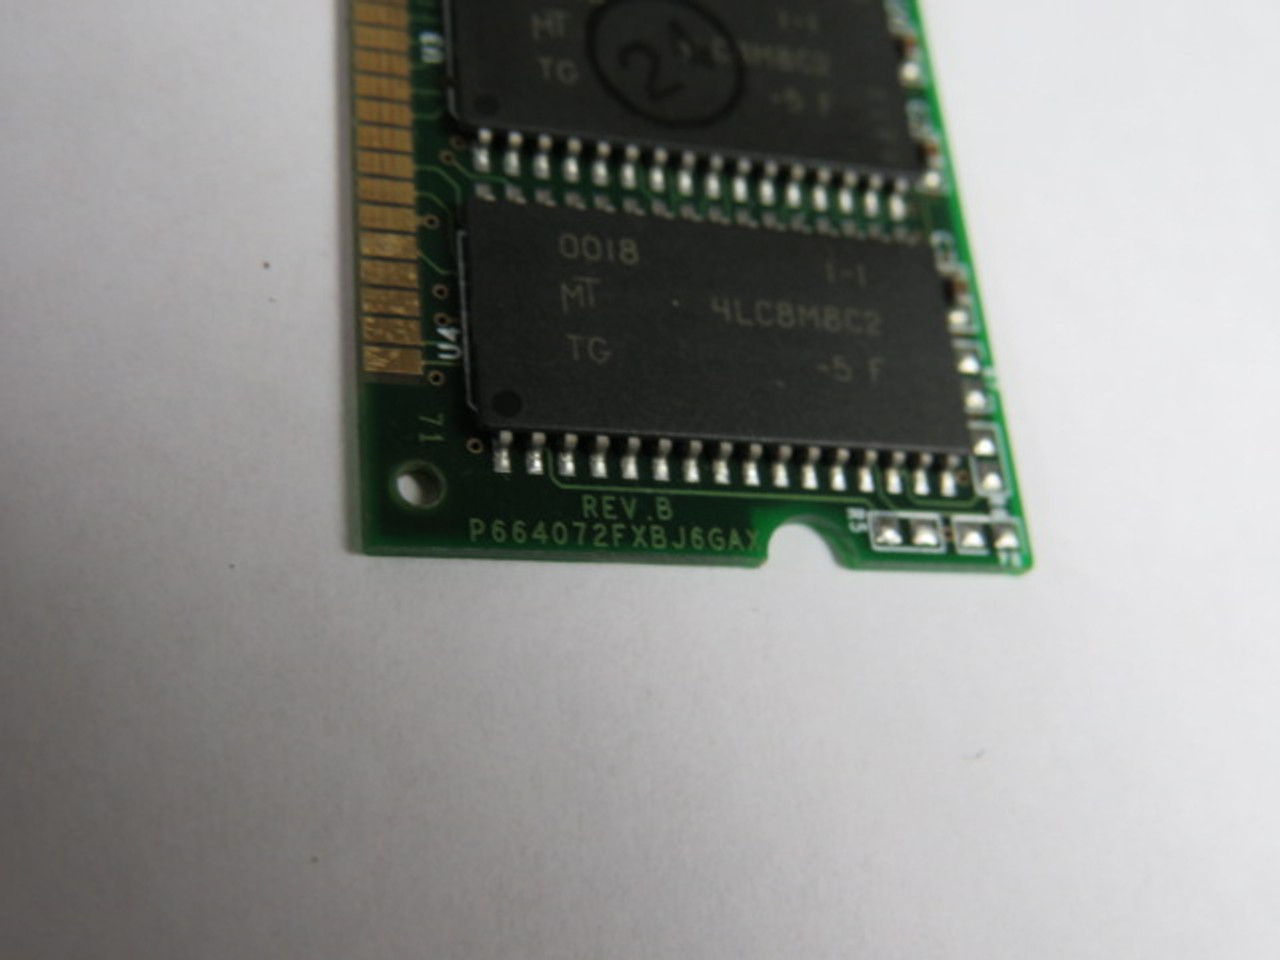 Samsung P664072FXBJ6GAX USA Memory SMART 32MB USED